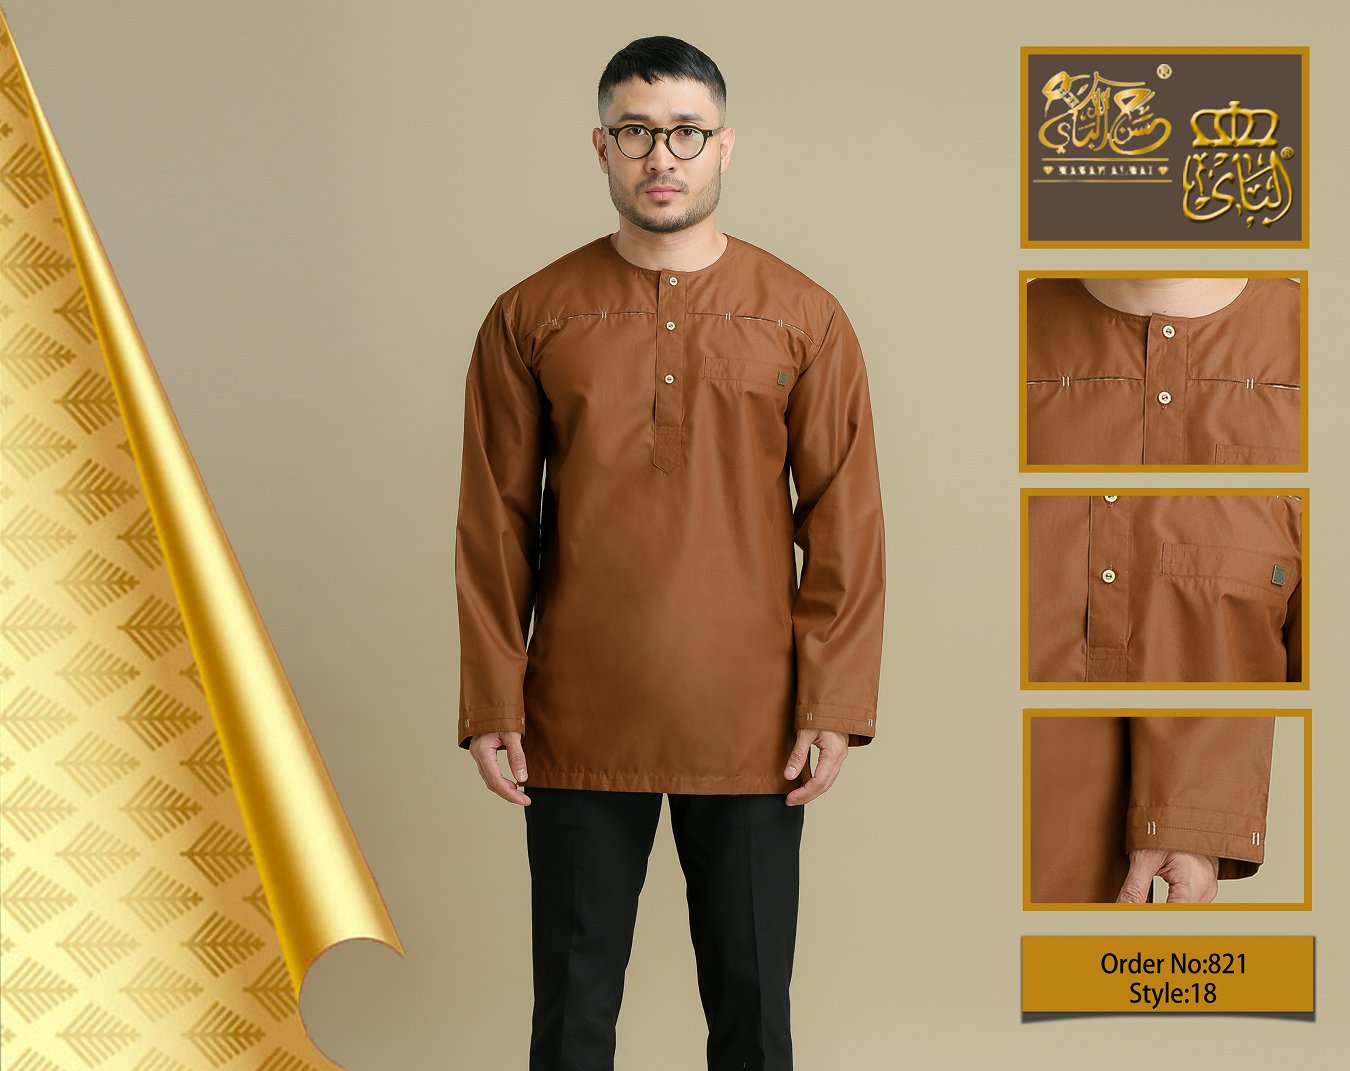 Malay clothing66